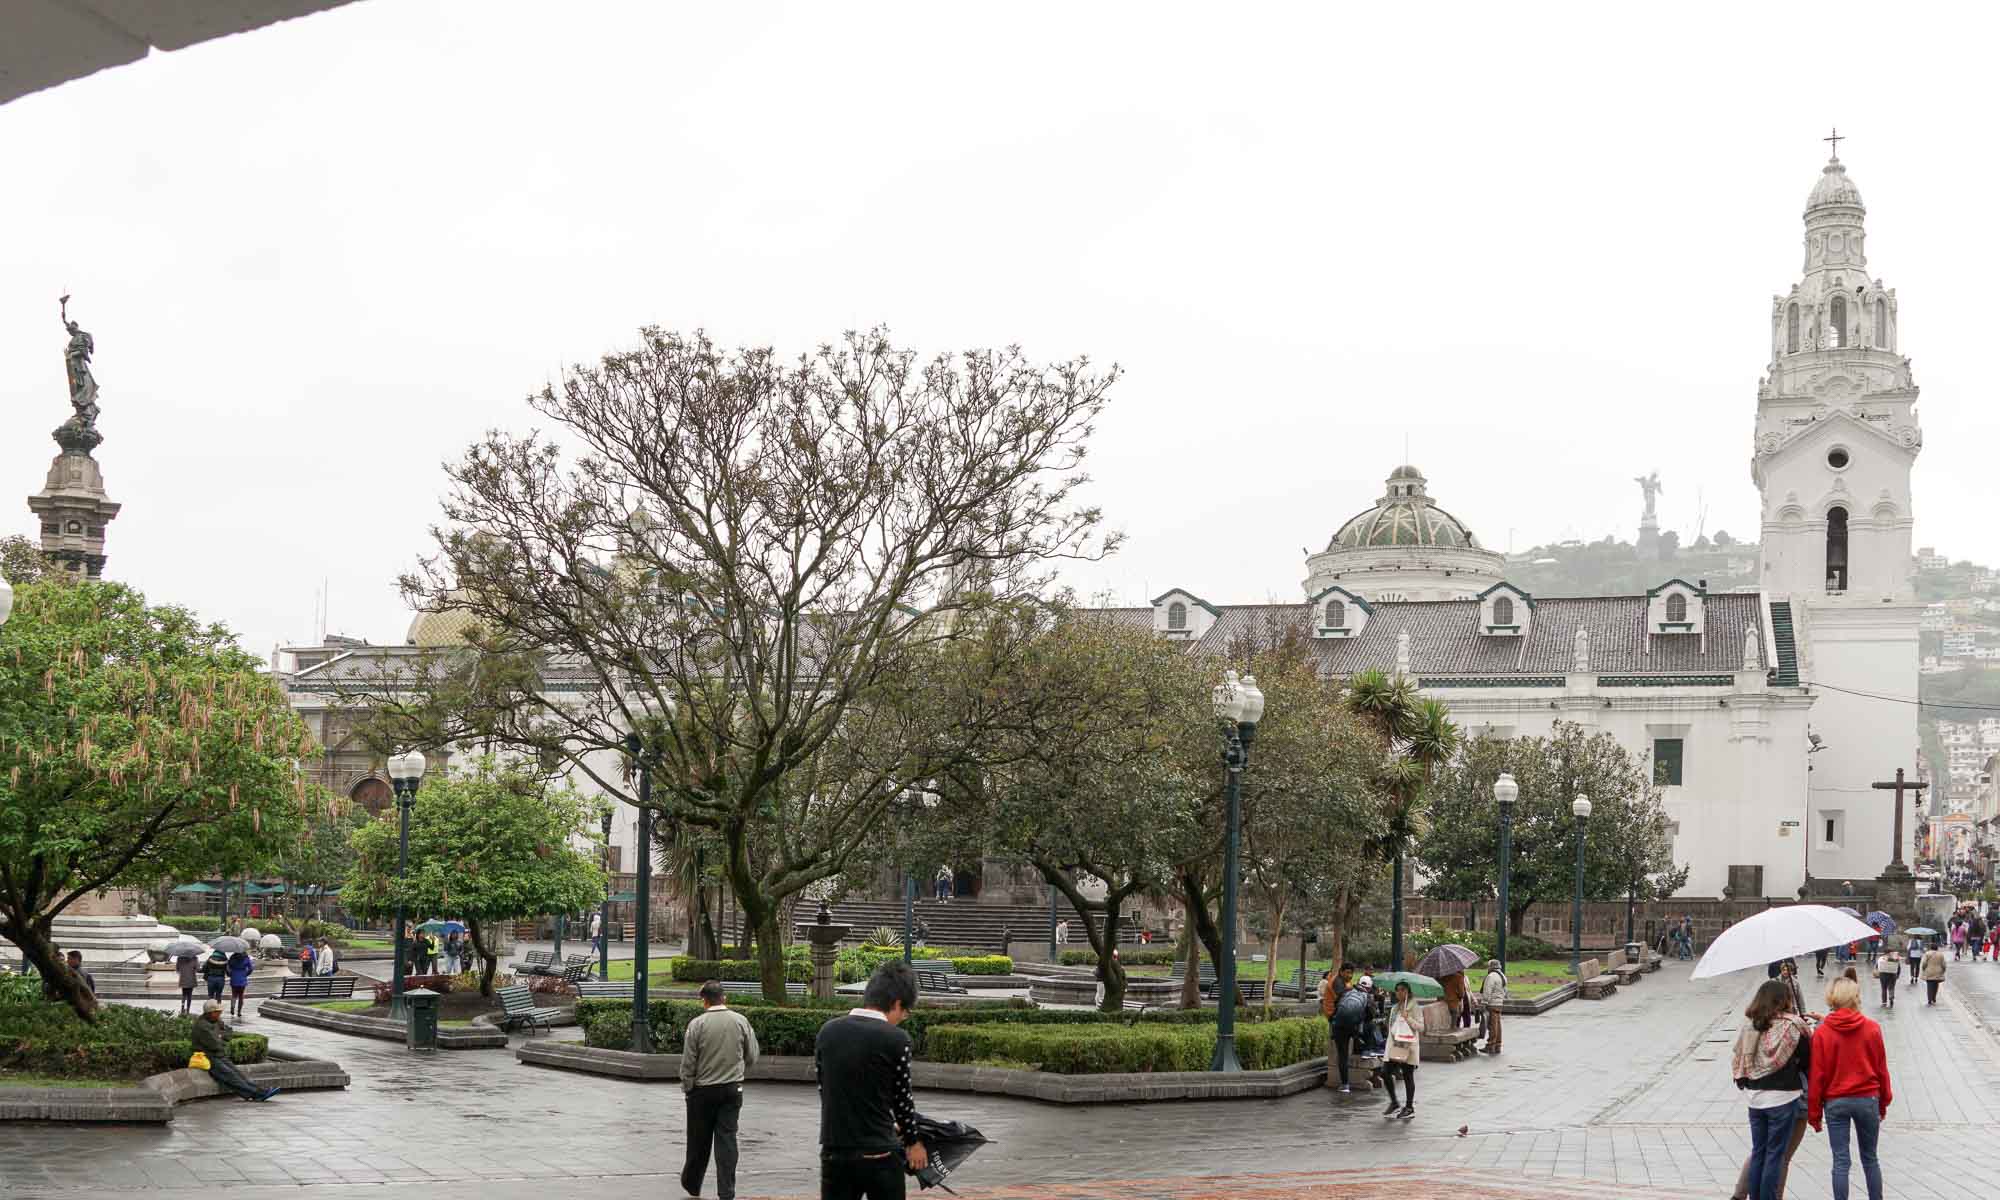 Plaza Grande with the Catedral Metropolitana de Quito